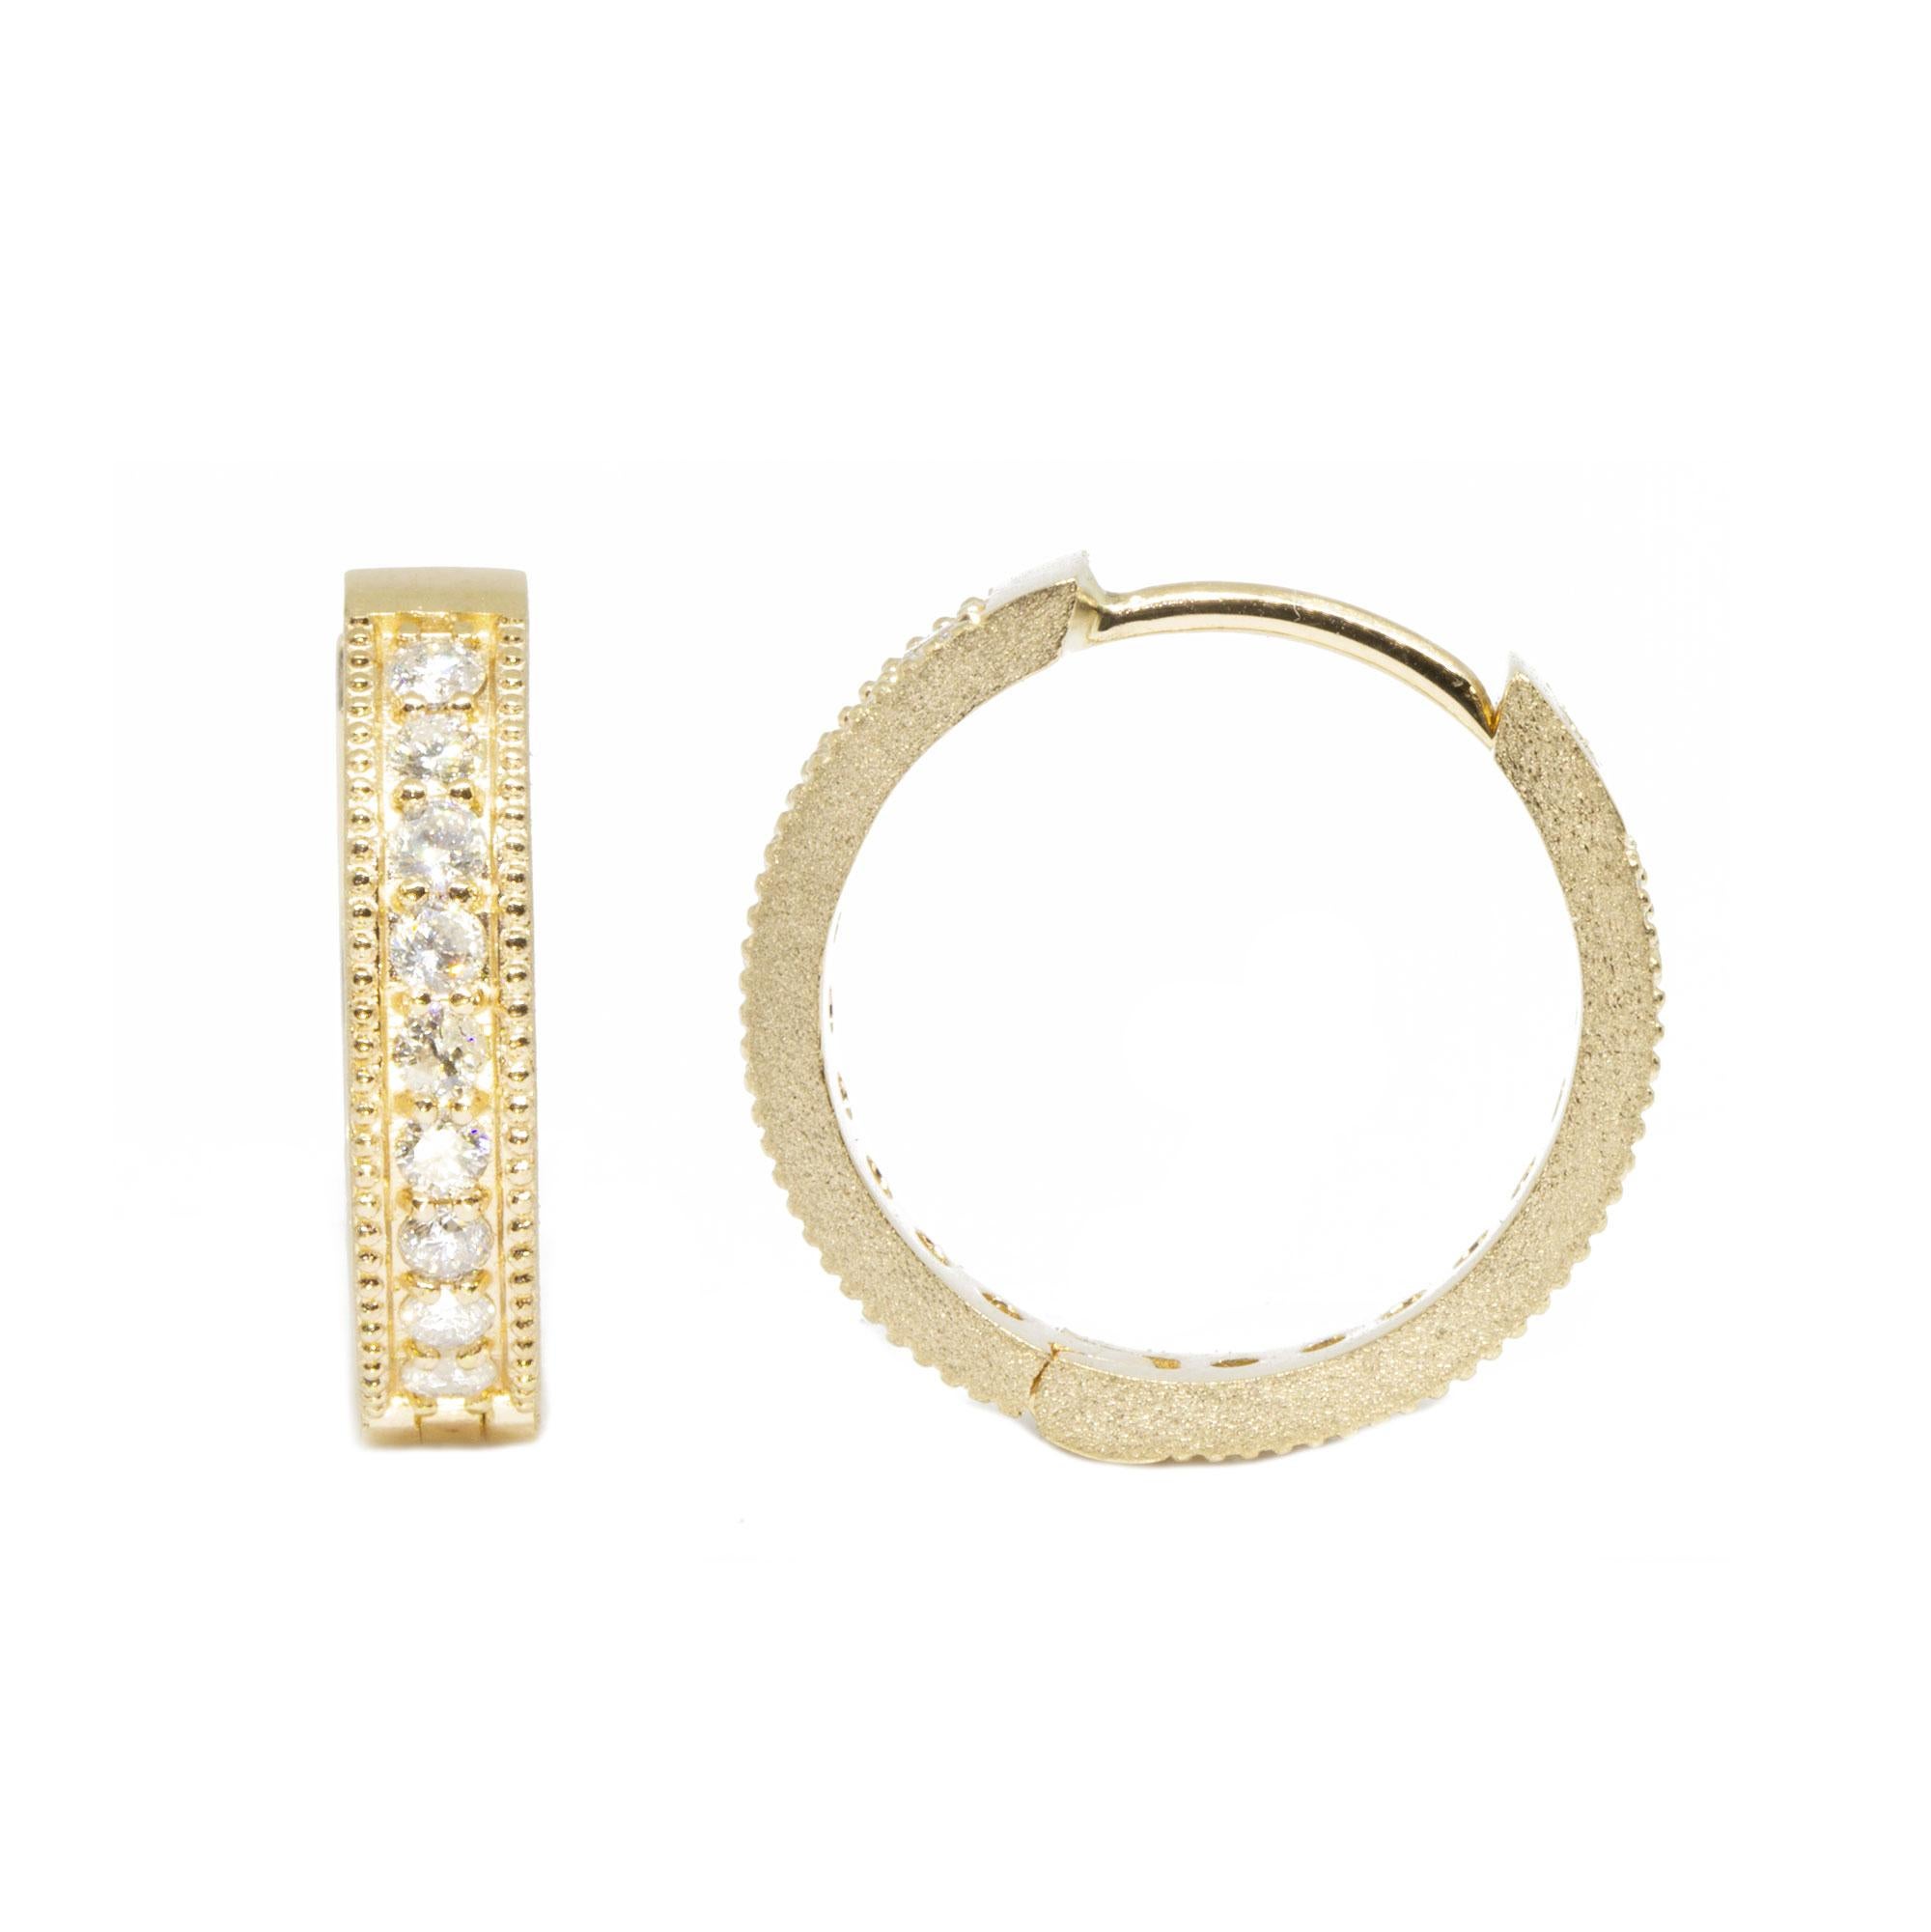 Details
Metal: 18K Yellow Gold
Diamond carat: 1
Size: 17mm
Diamond size: